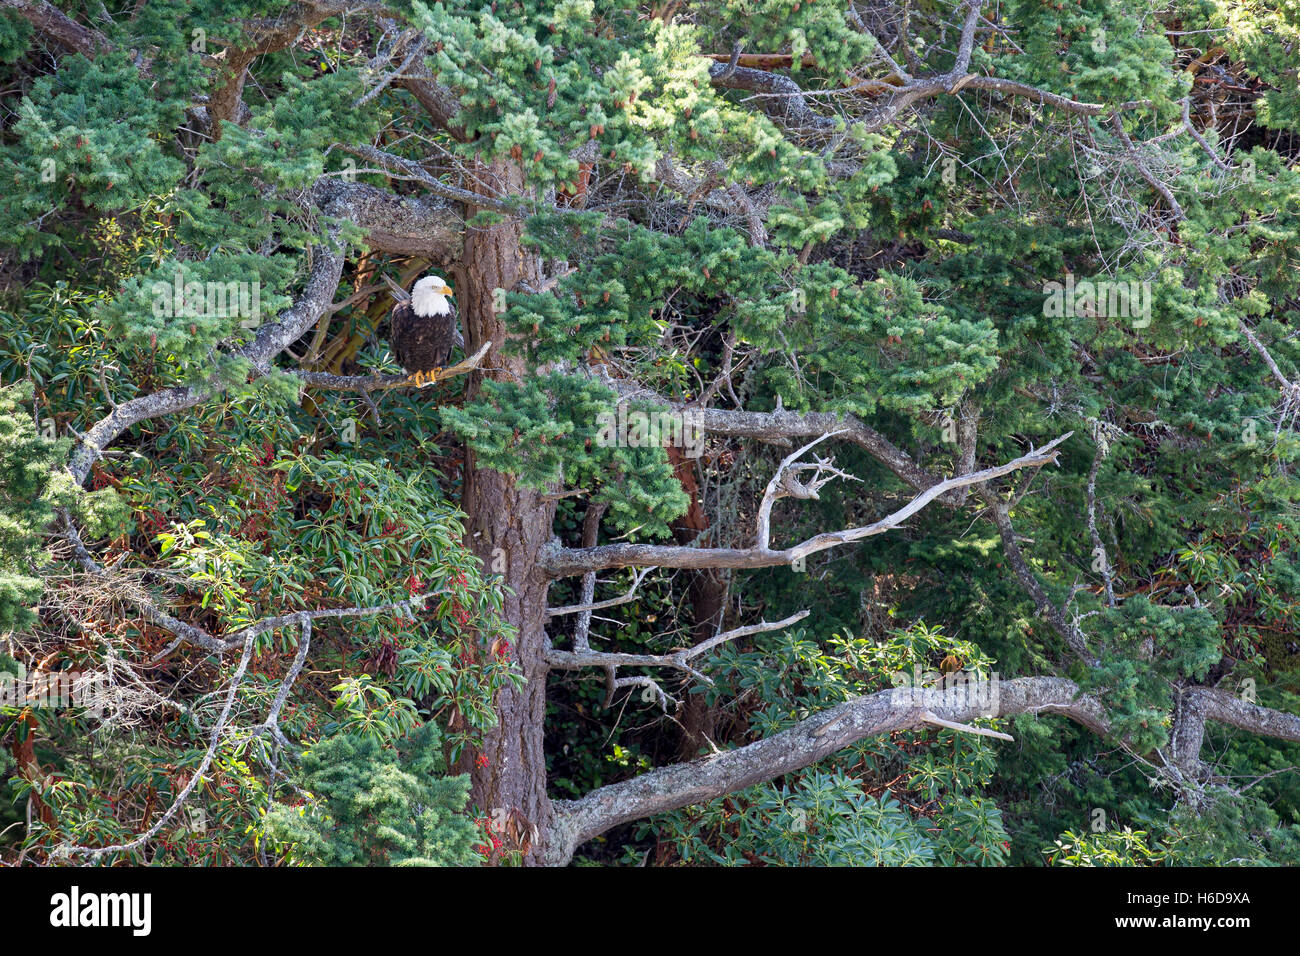 Bald eagle, Haliaeetus leucocephalus, in trees on perch. Washington state forest. Stock Photo